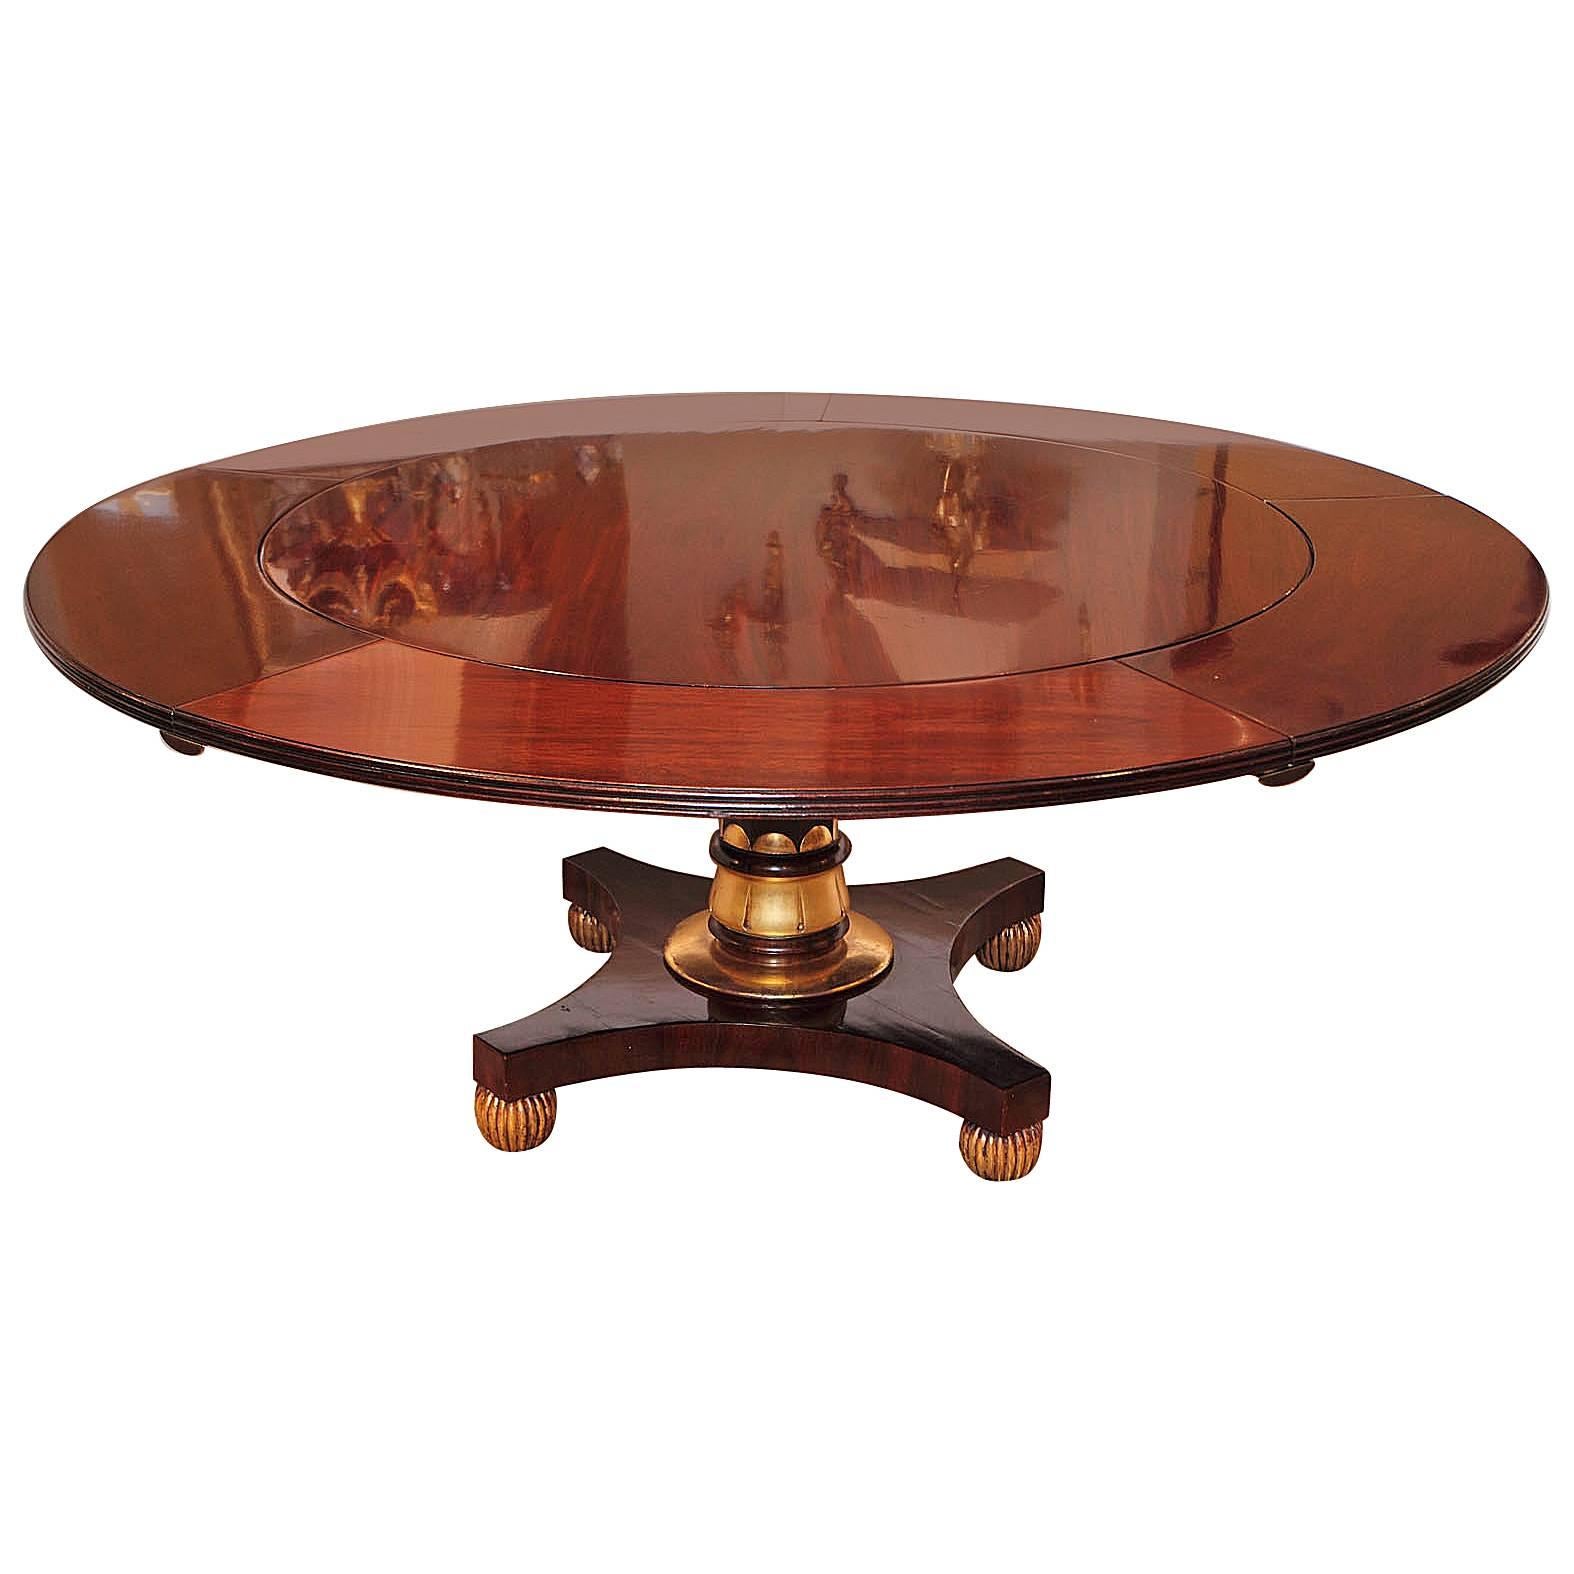 19th Century Regency Mahogany and Parcel-Gilt Dining Table